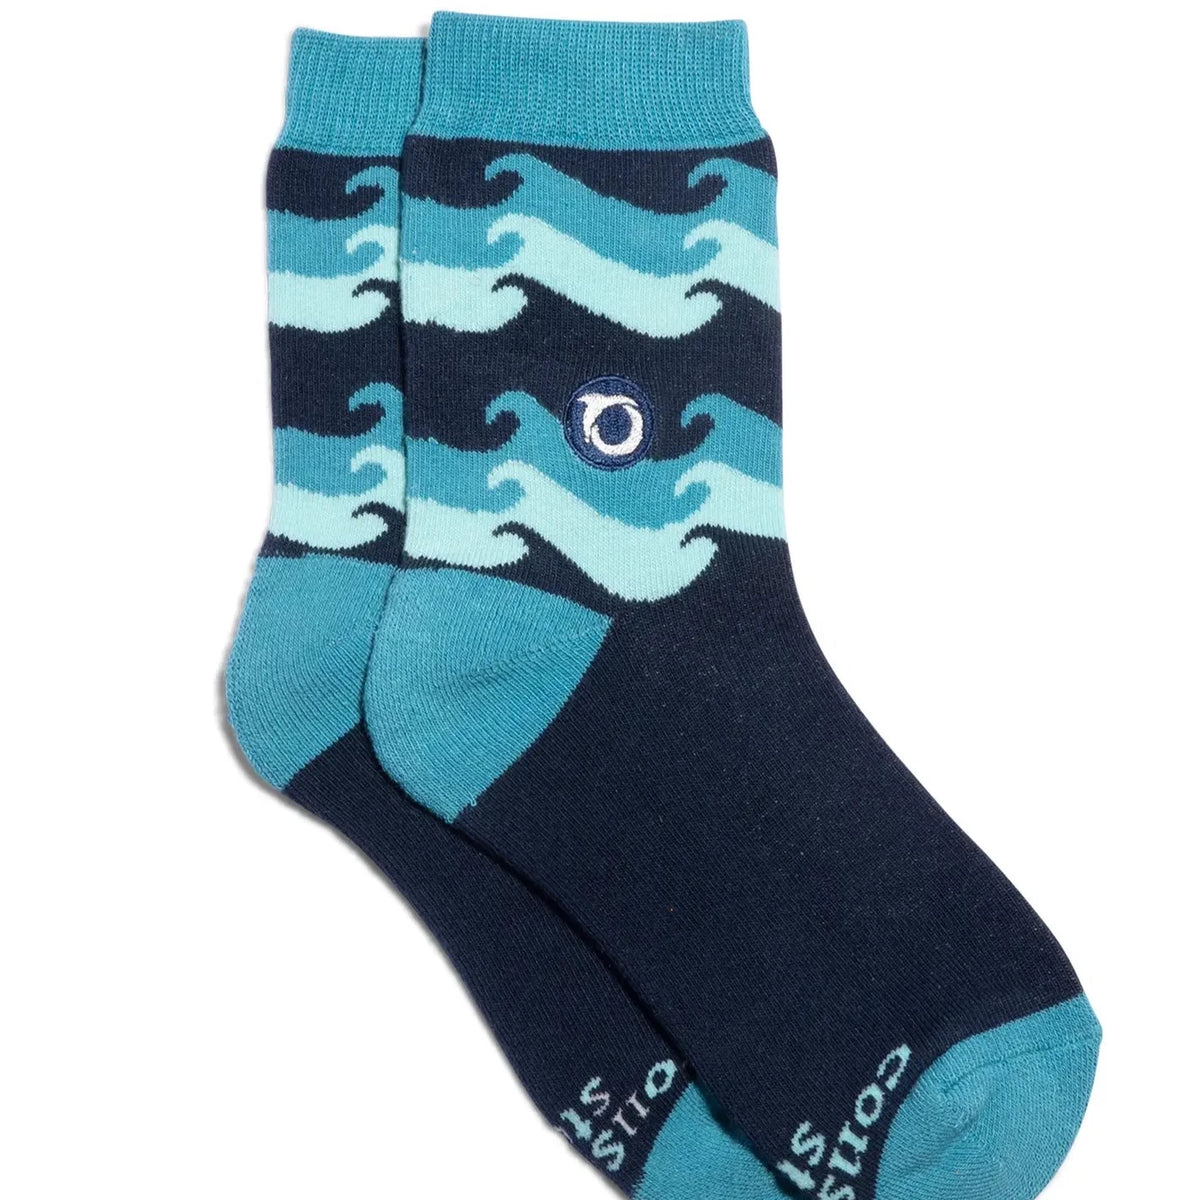 Kids Socks that Protect Oceans